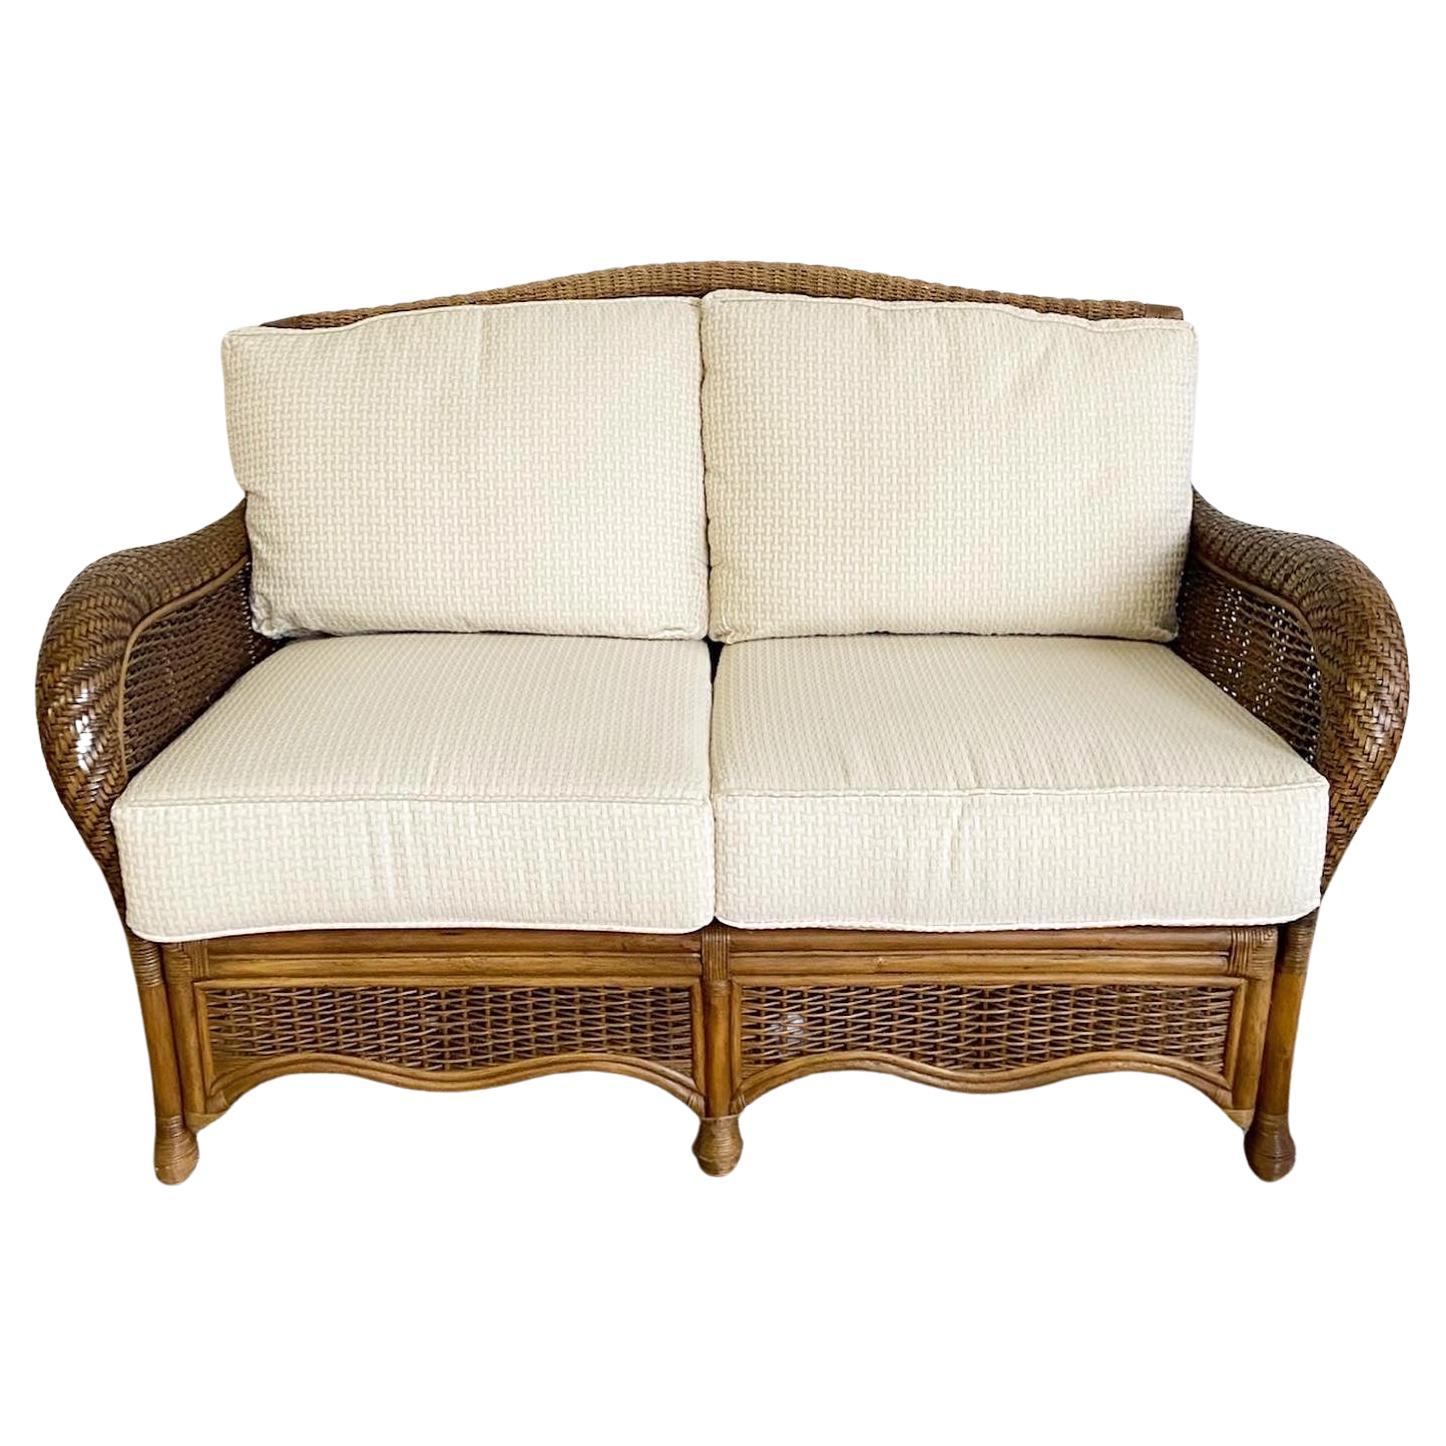 Boho Chic Bamboo Rattan Wicker Love Seat With Cushions